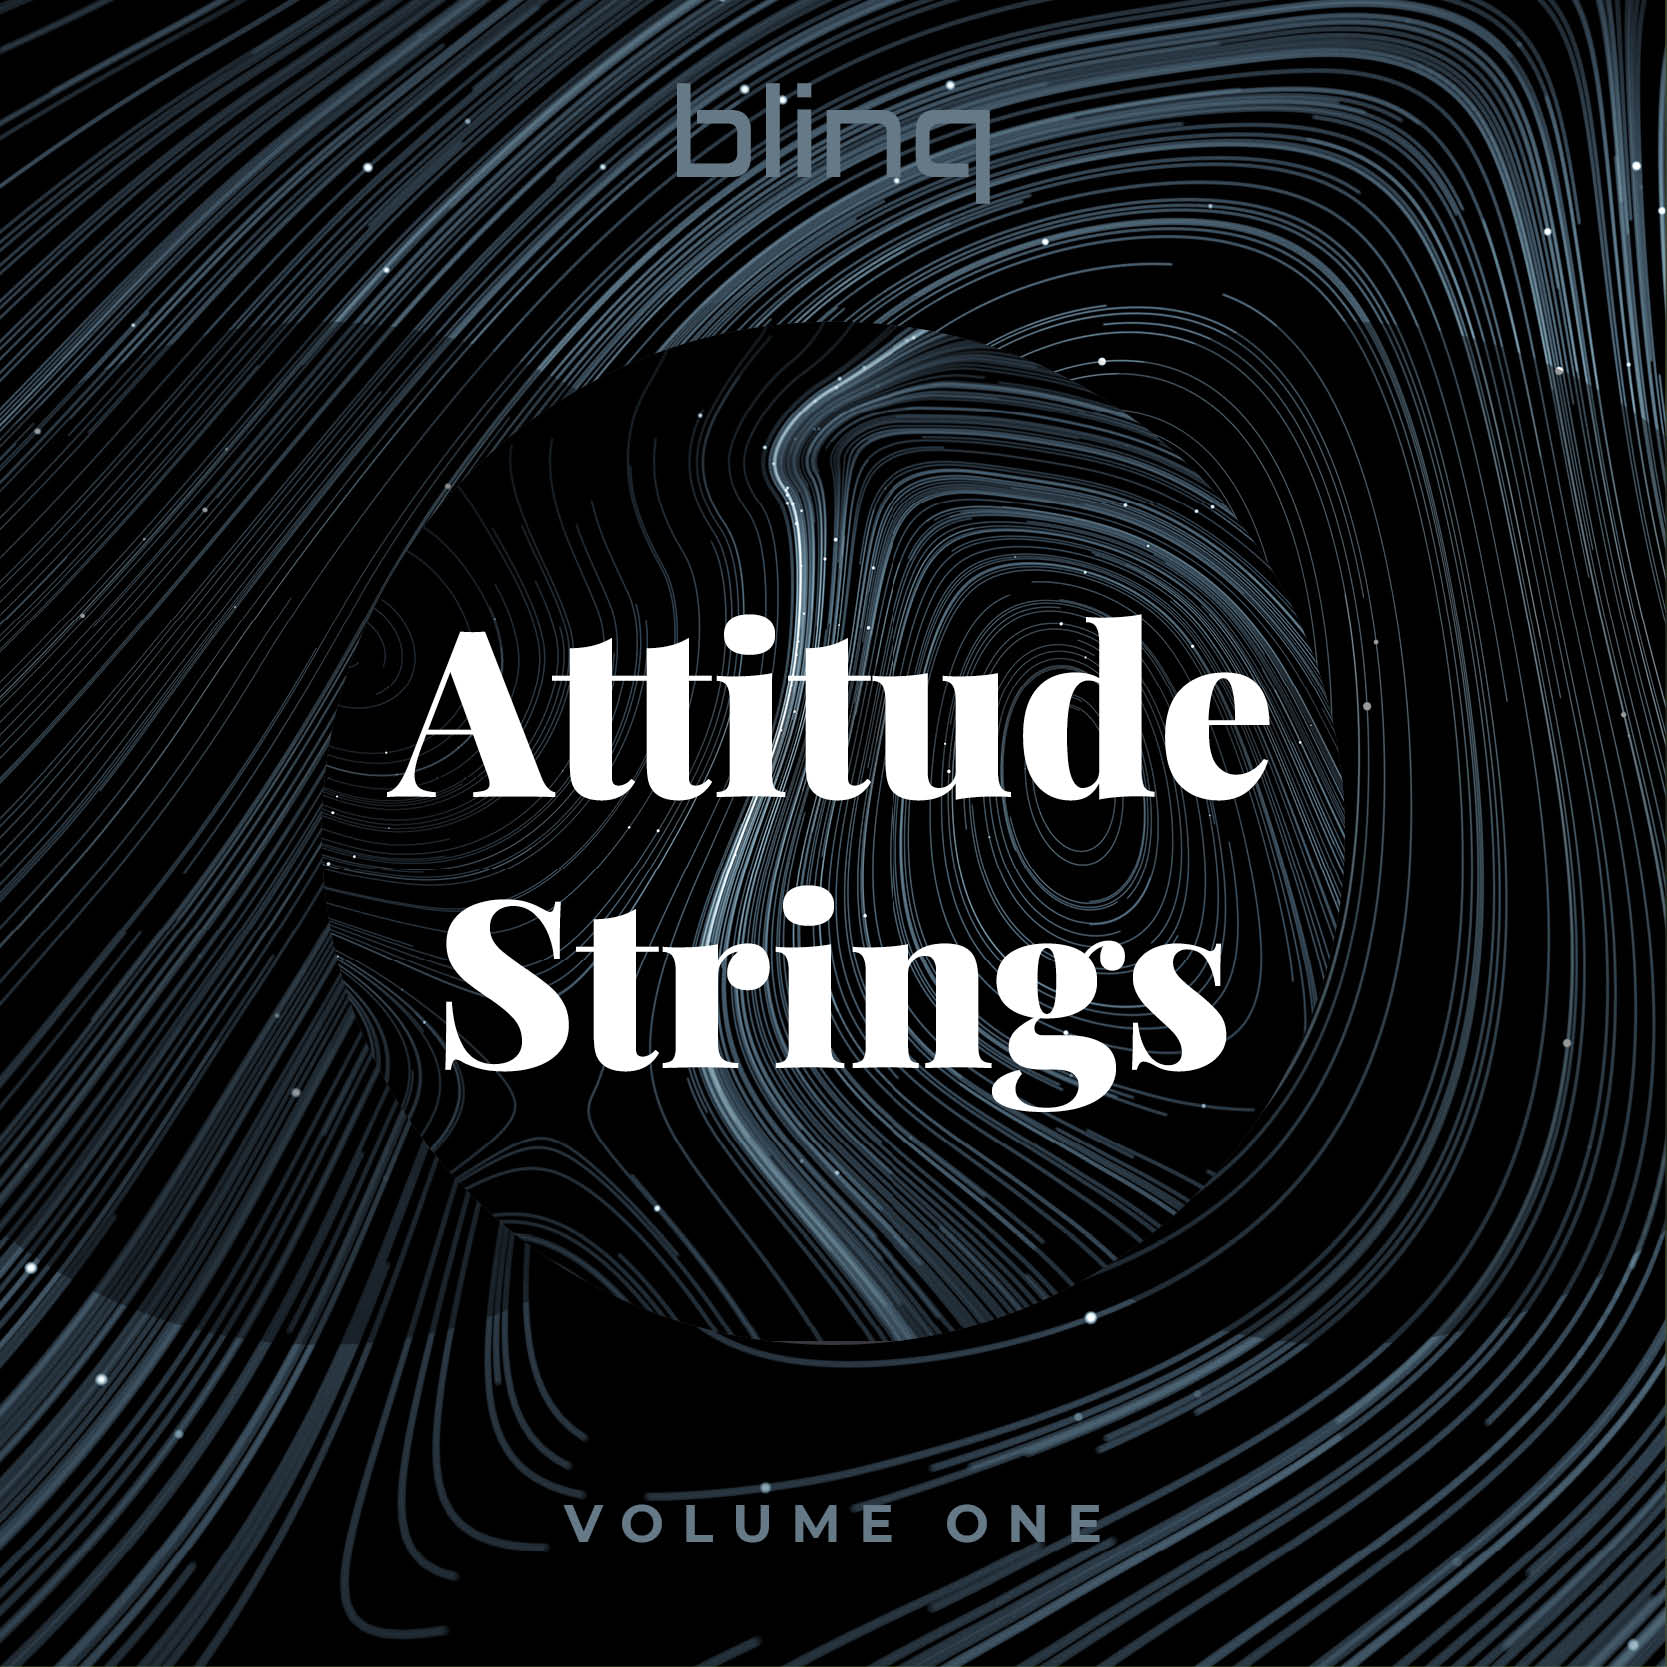 Attitude Strings